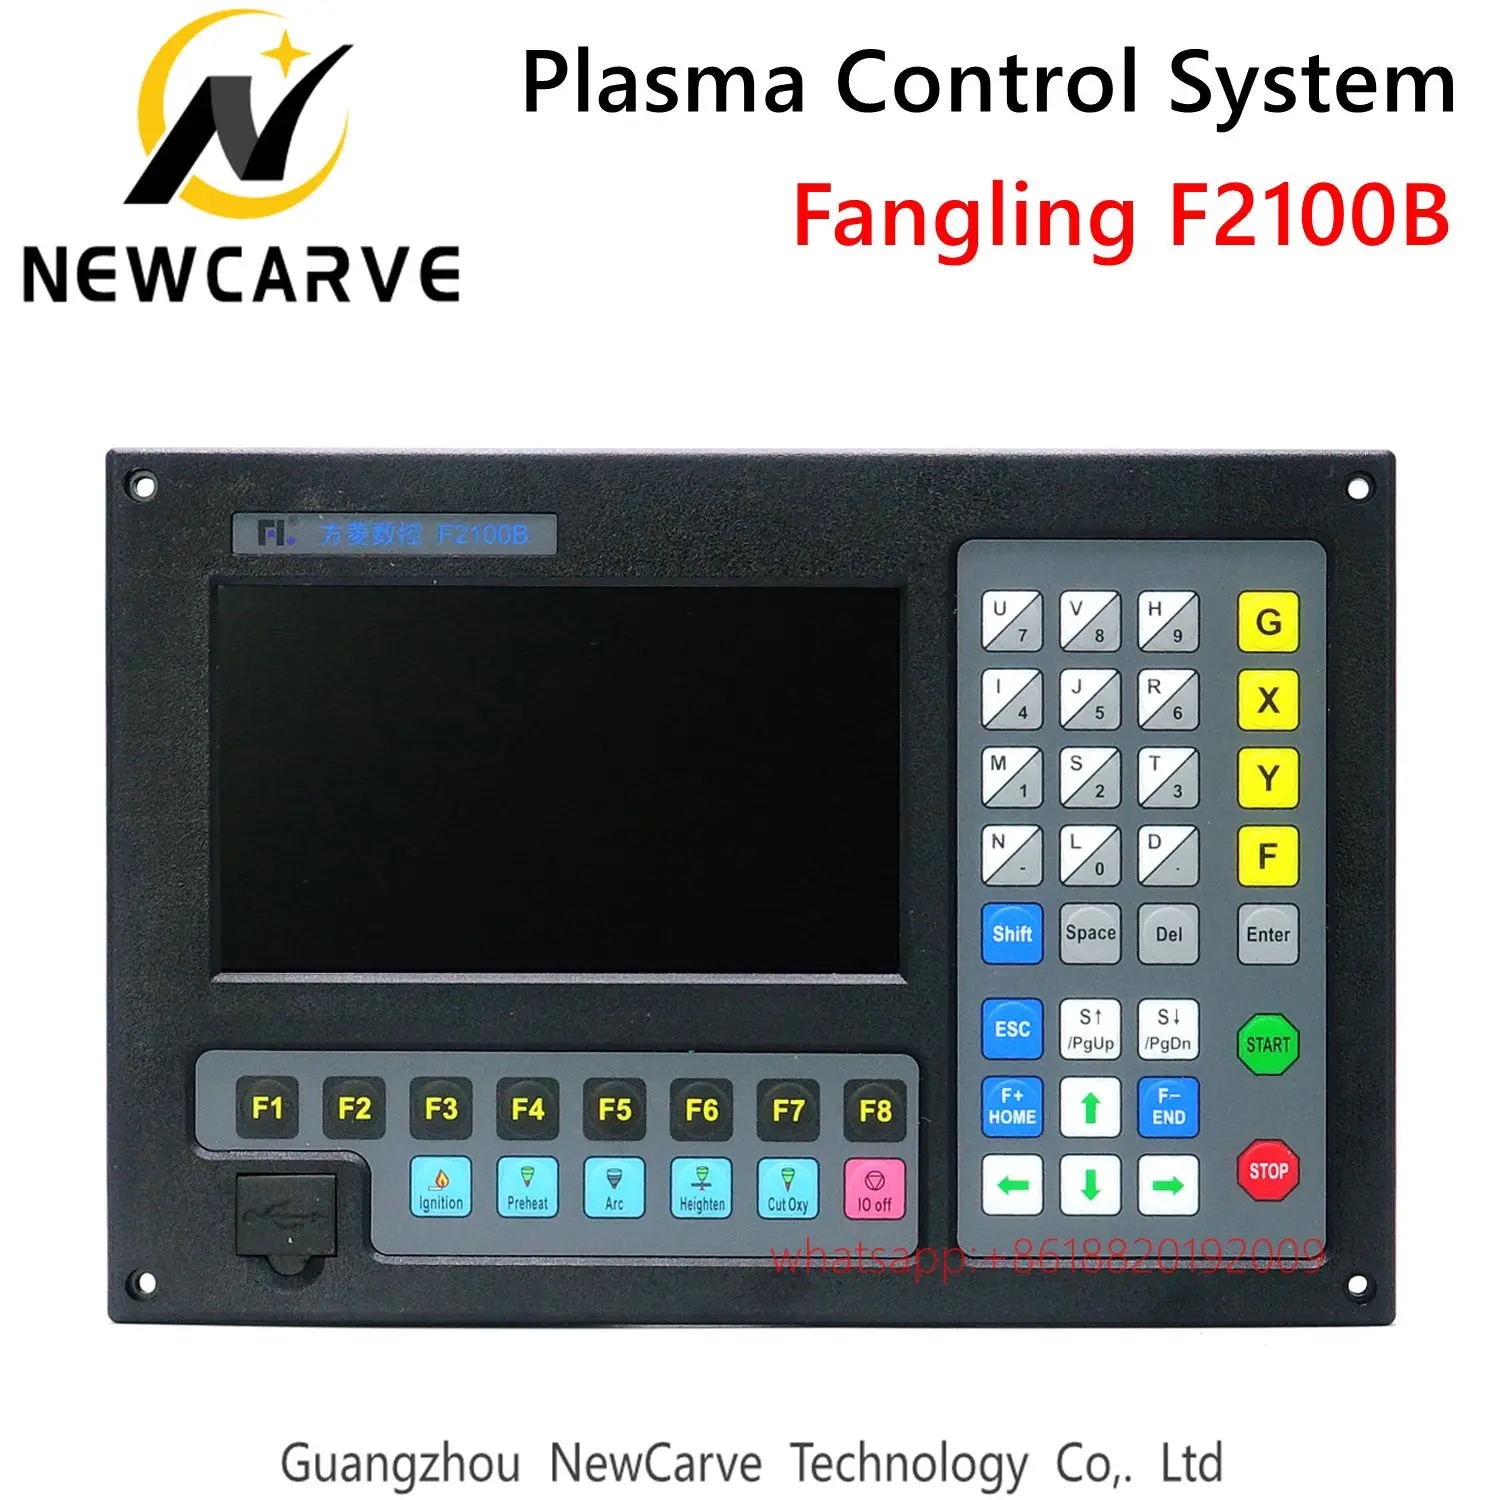 Controlador de Plasma Fangling F2100B, sistema CNC, máquina de corte por llama, sistema de Control Digital de Plasma de 2 ejes